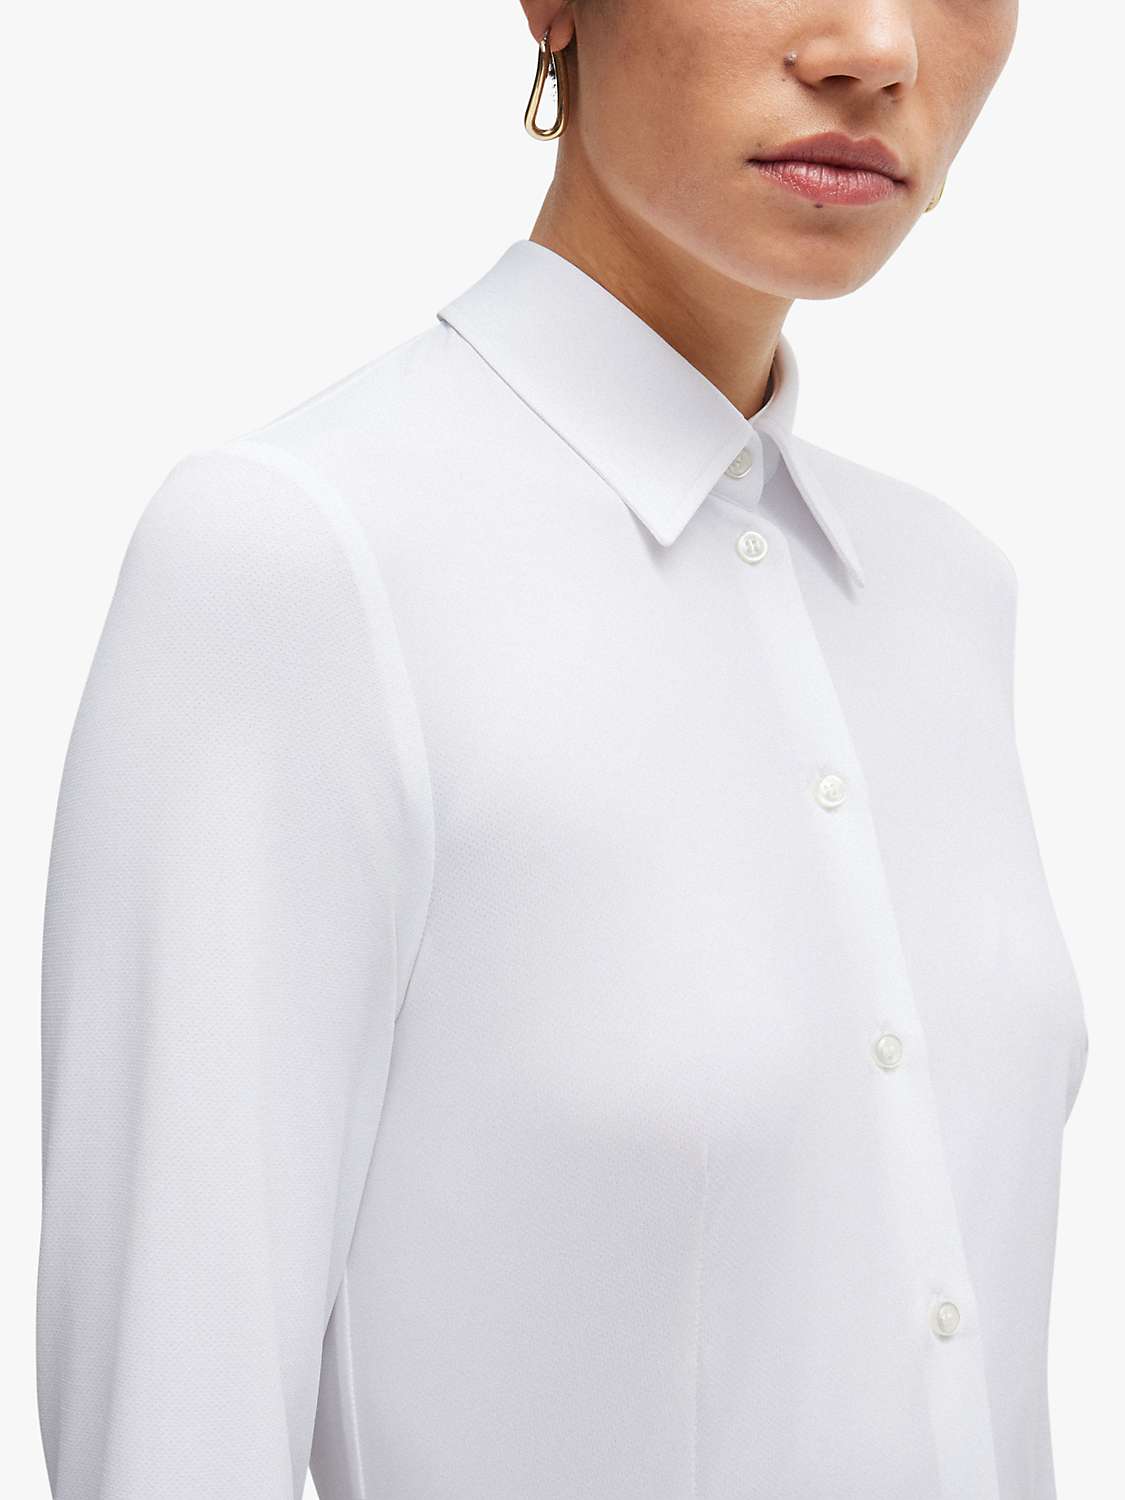 Buy BOSS Boanna 100 Long Sleeve Shirt, White Online at johnlewis.com